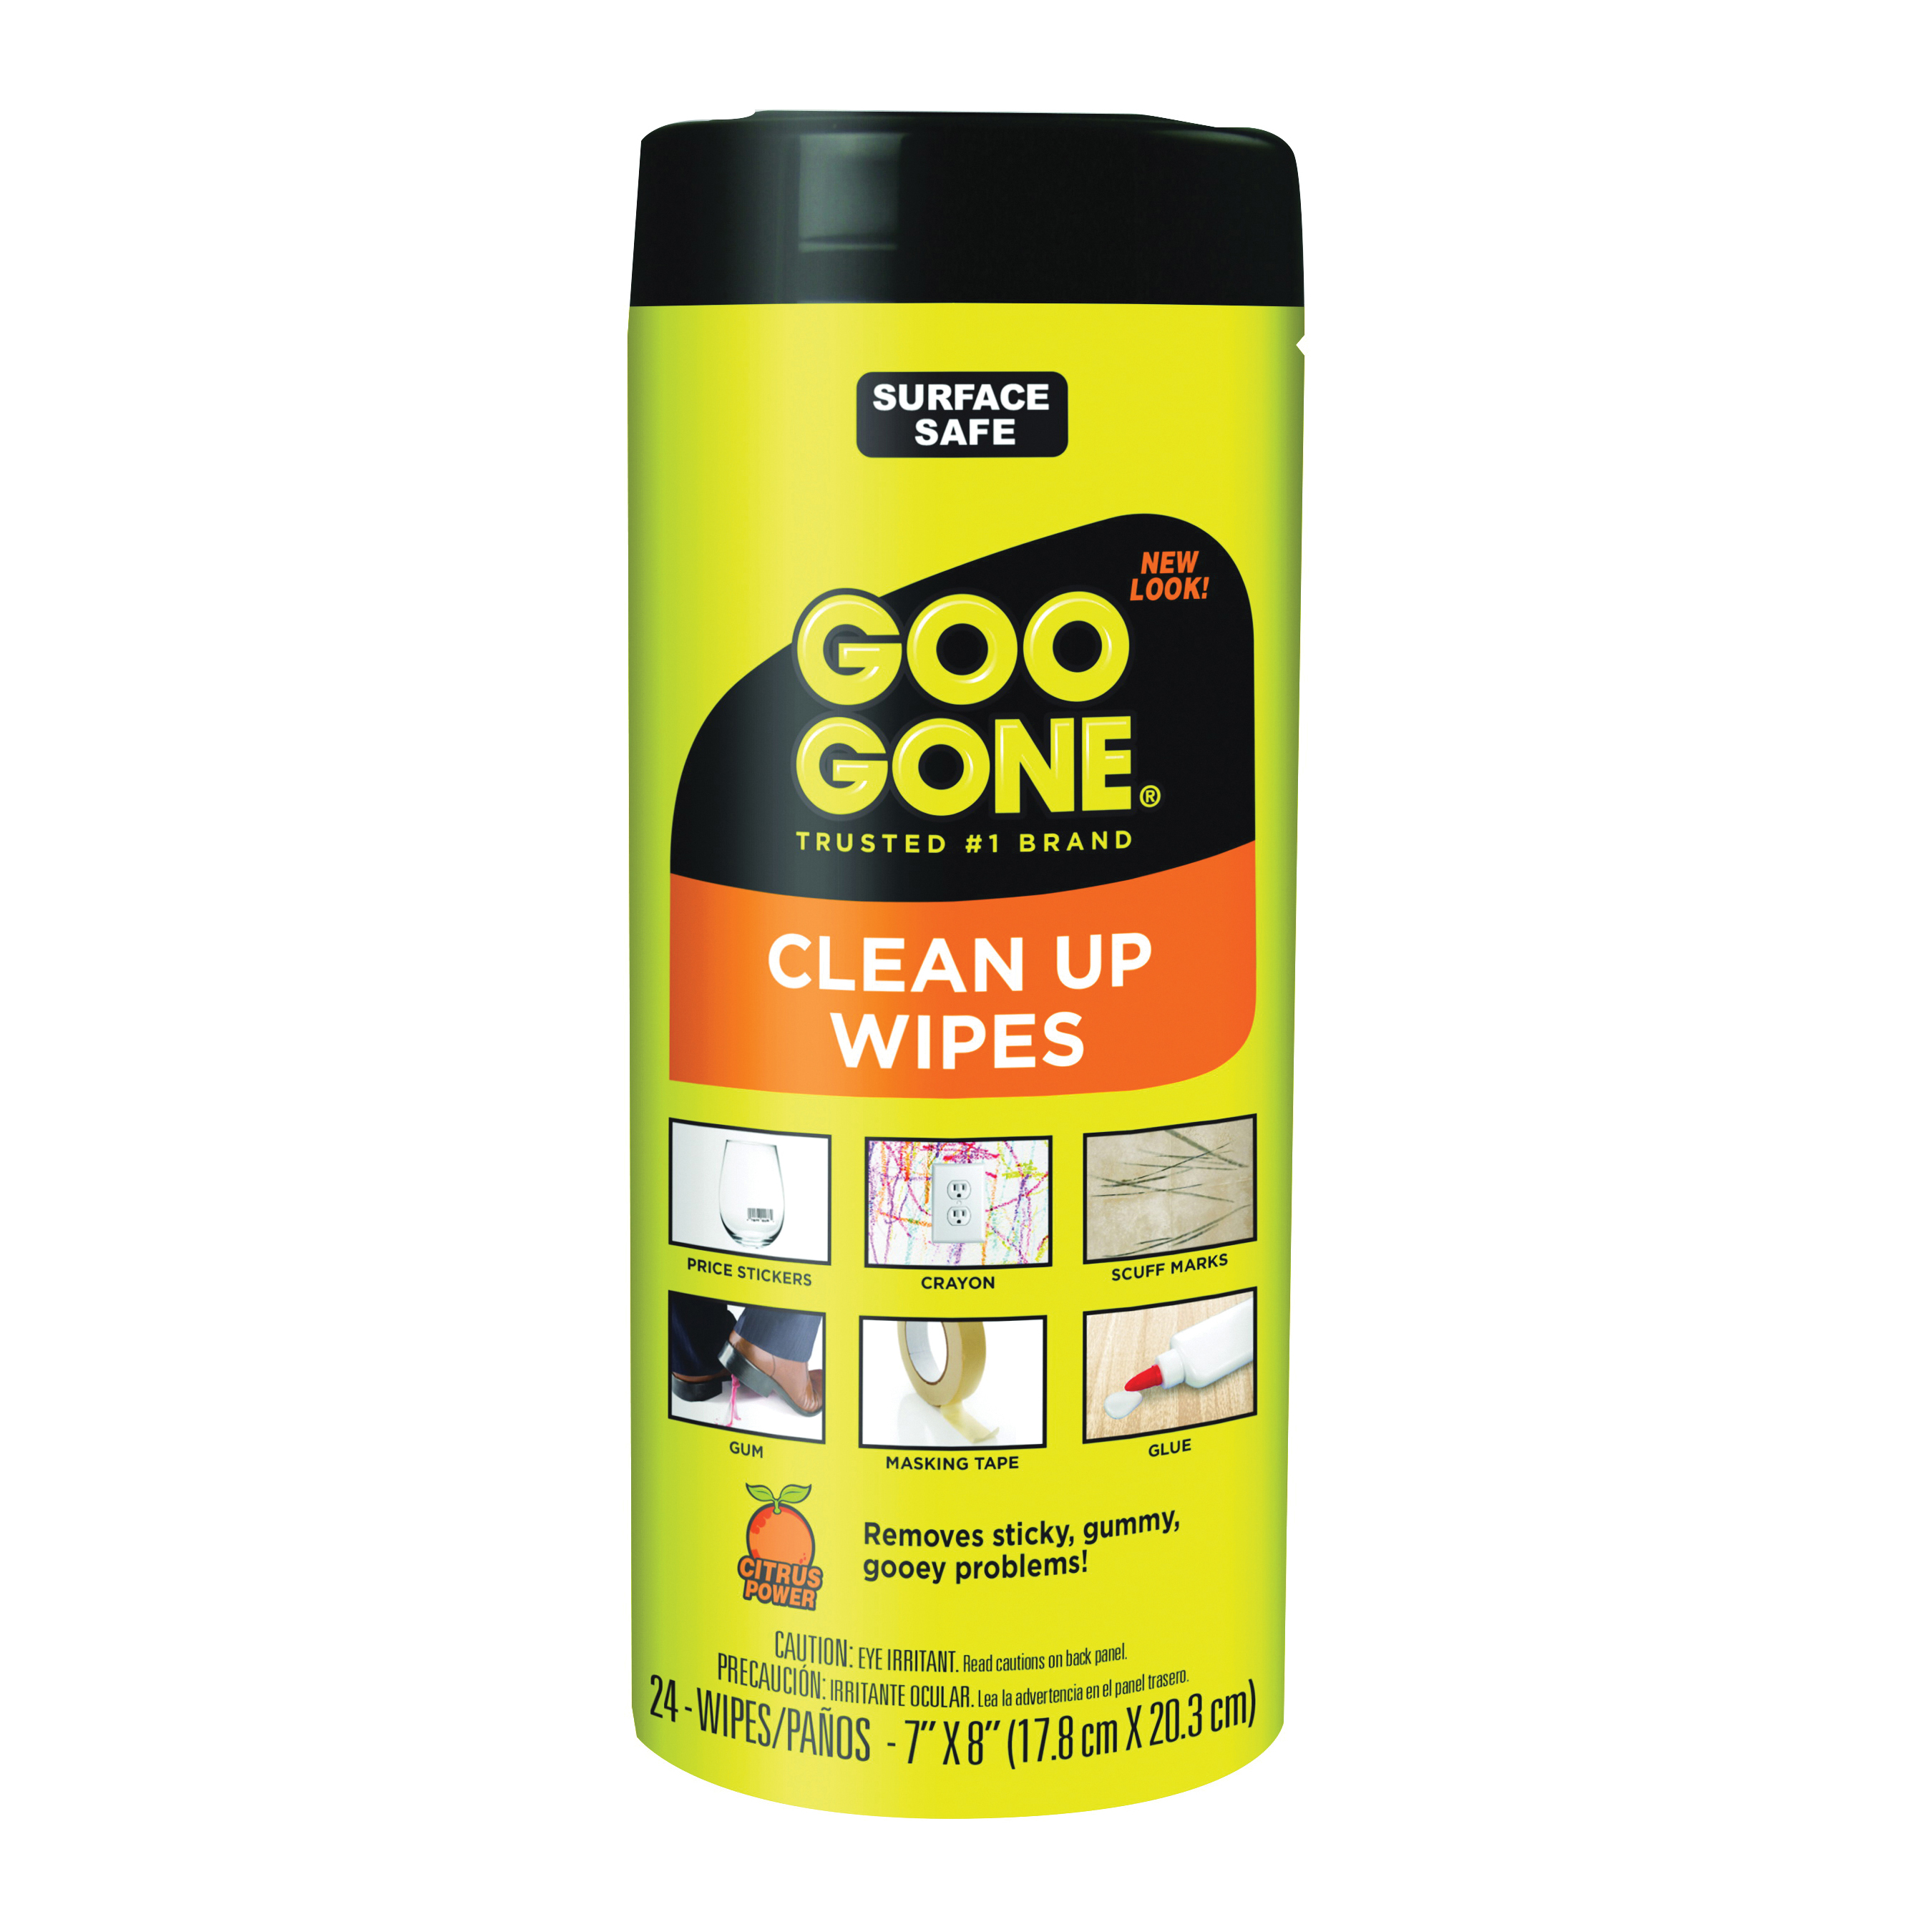 Magic 3060 Cleaning Wipes Box, 8 in L, 7 in W